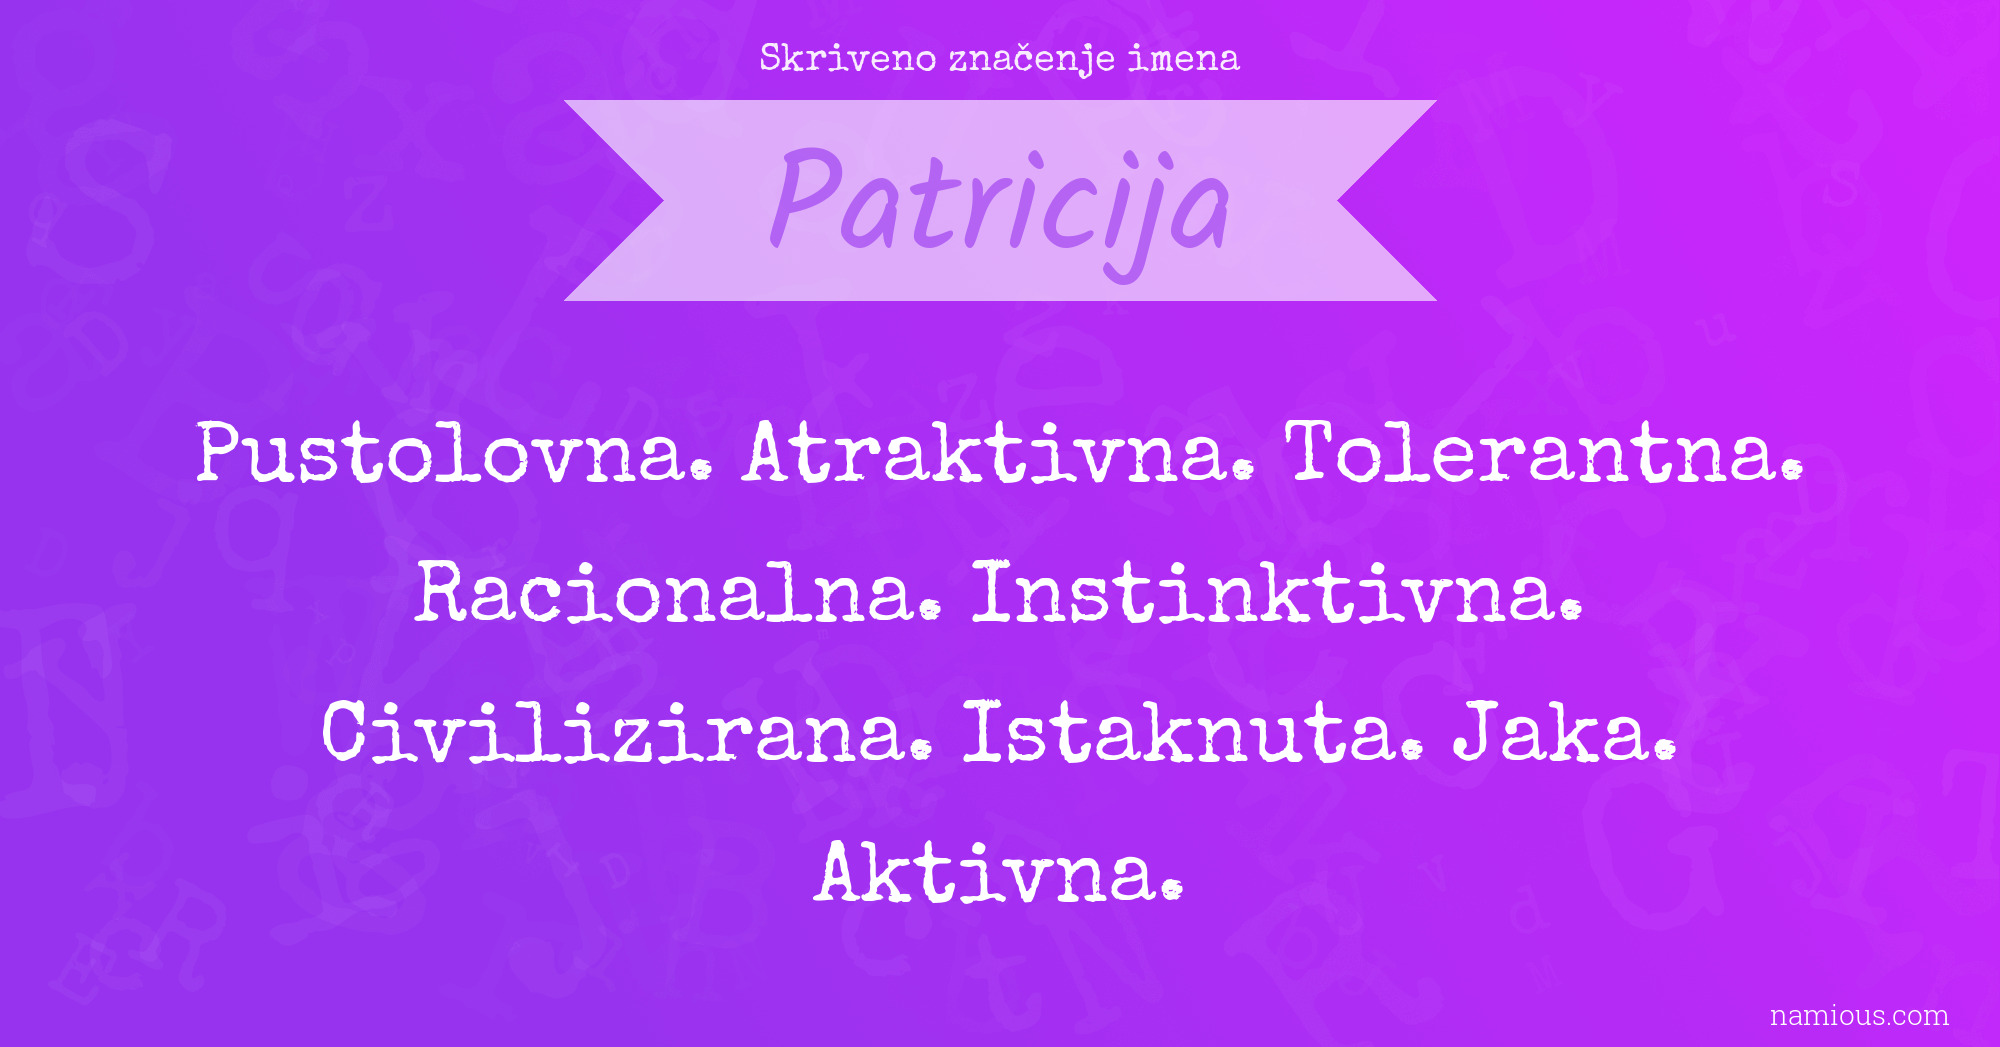 Skriveno značenje imena Patricija